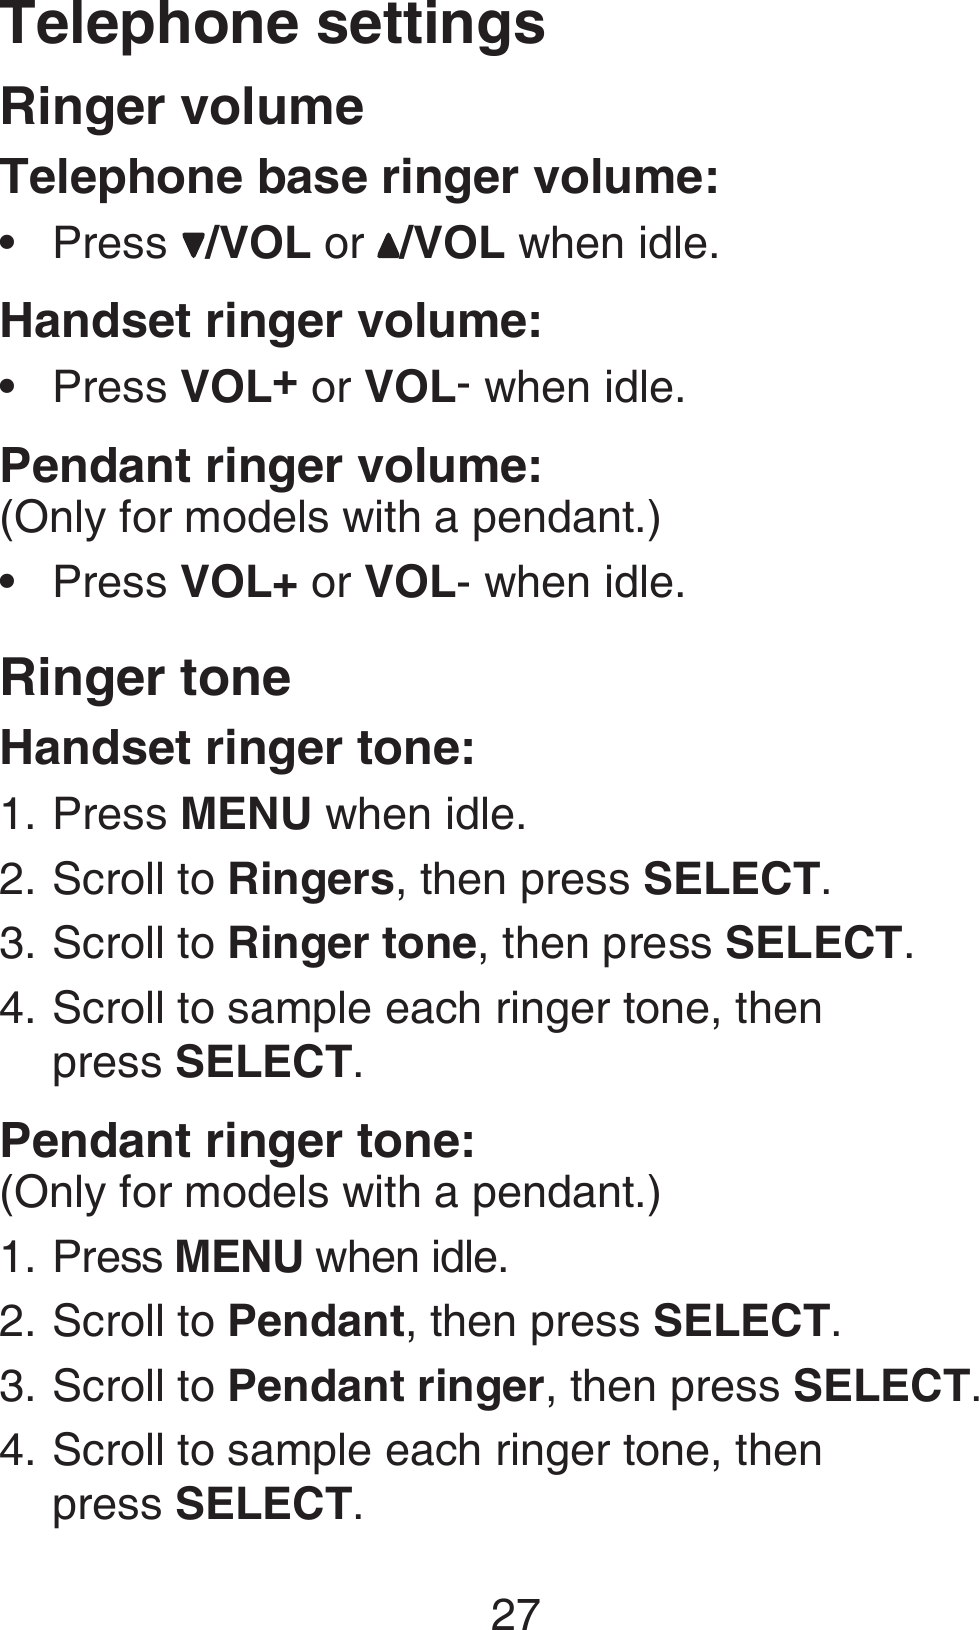 27Telephone settingsRinger volumeTelephone base ringer volume:Press /VOL or  /VOL when idle.Handset ringer volume:Press VOL+ or VOL- when idle.Pendant ringer volume:(Only for models with a pendant.)Press VOL+ or VOL- when idle.Ringer toneHandset ringer tone:Press MENU when idle.Scroll to Ringers, then press SELECT.Scroll to Ringer tone, then press SELECT.Scroll to sample each ringer tone, then  press SELECT.Pendant ringer tone:(Only for models with a pendant.)Press MENU when idle.Scroll to Pendant, then press SELECT.Scroll to Pendant ringer, then press SELECT.Scroll to sample each ringer tone, then  press SELECT.•••1.2.3.4.1.2.3.4.